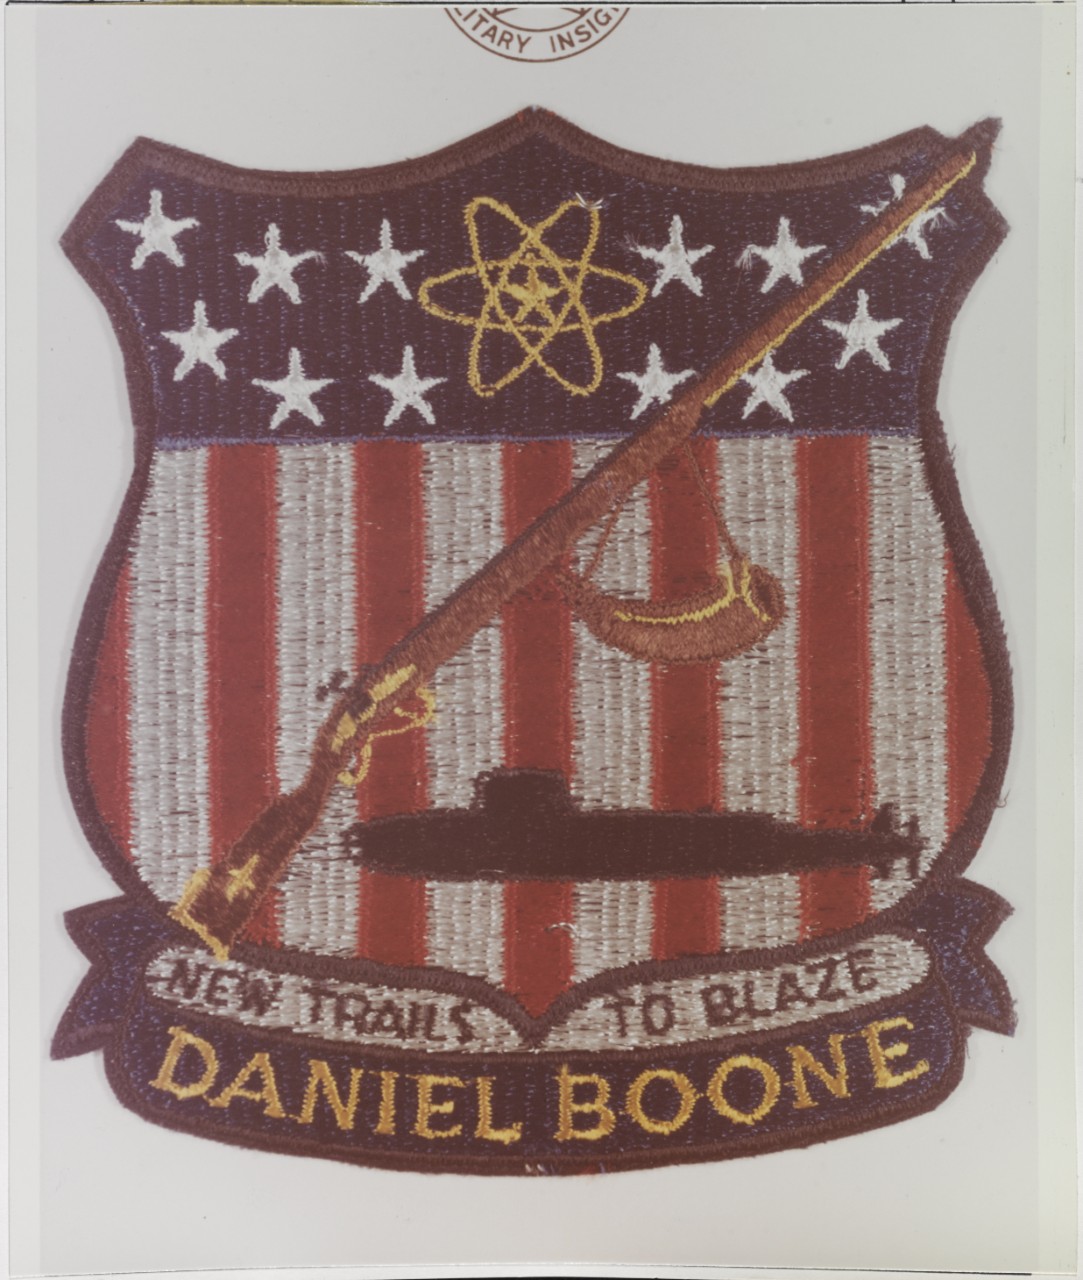 Insignia: USS DANIEL BOONE (SSBN-629)